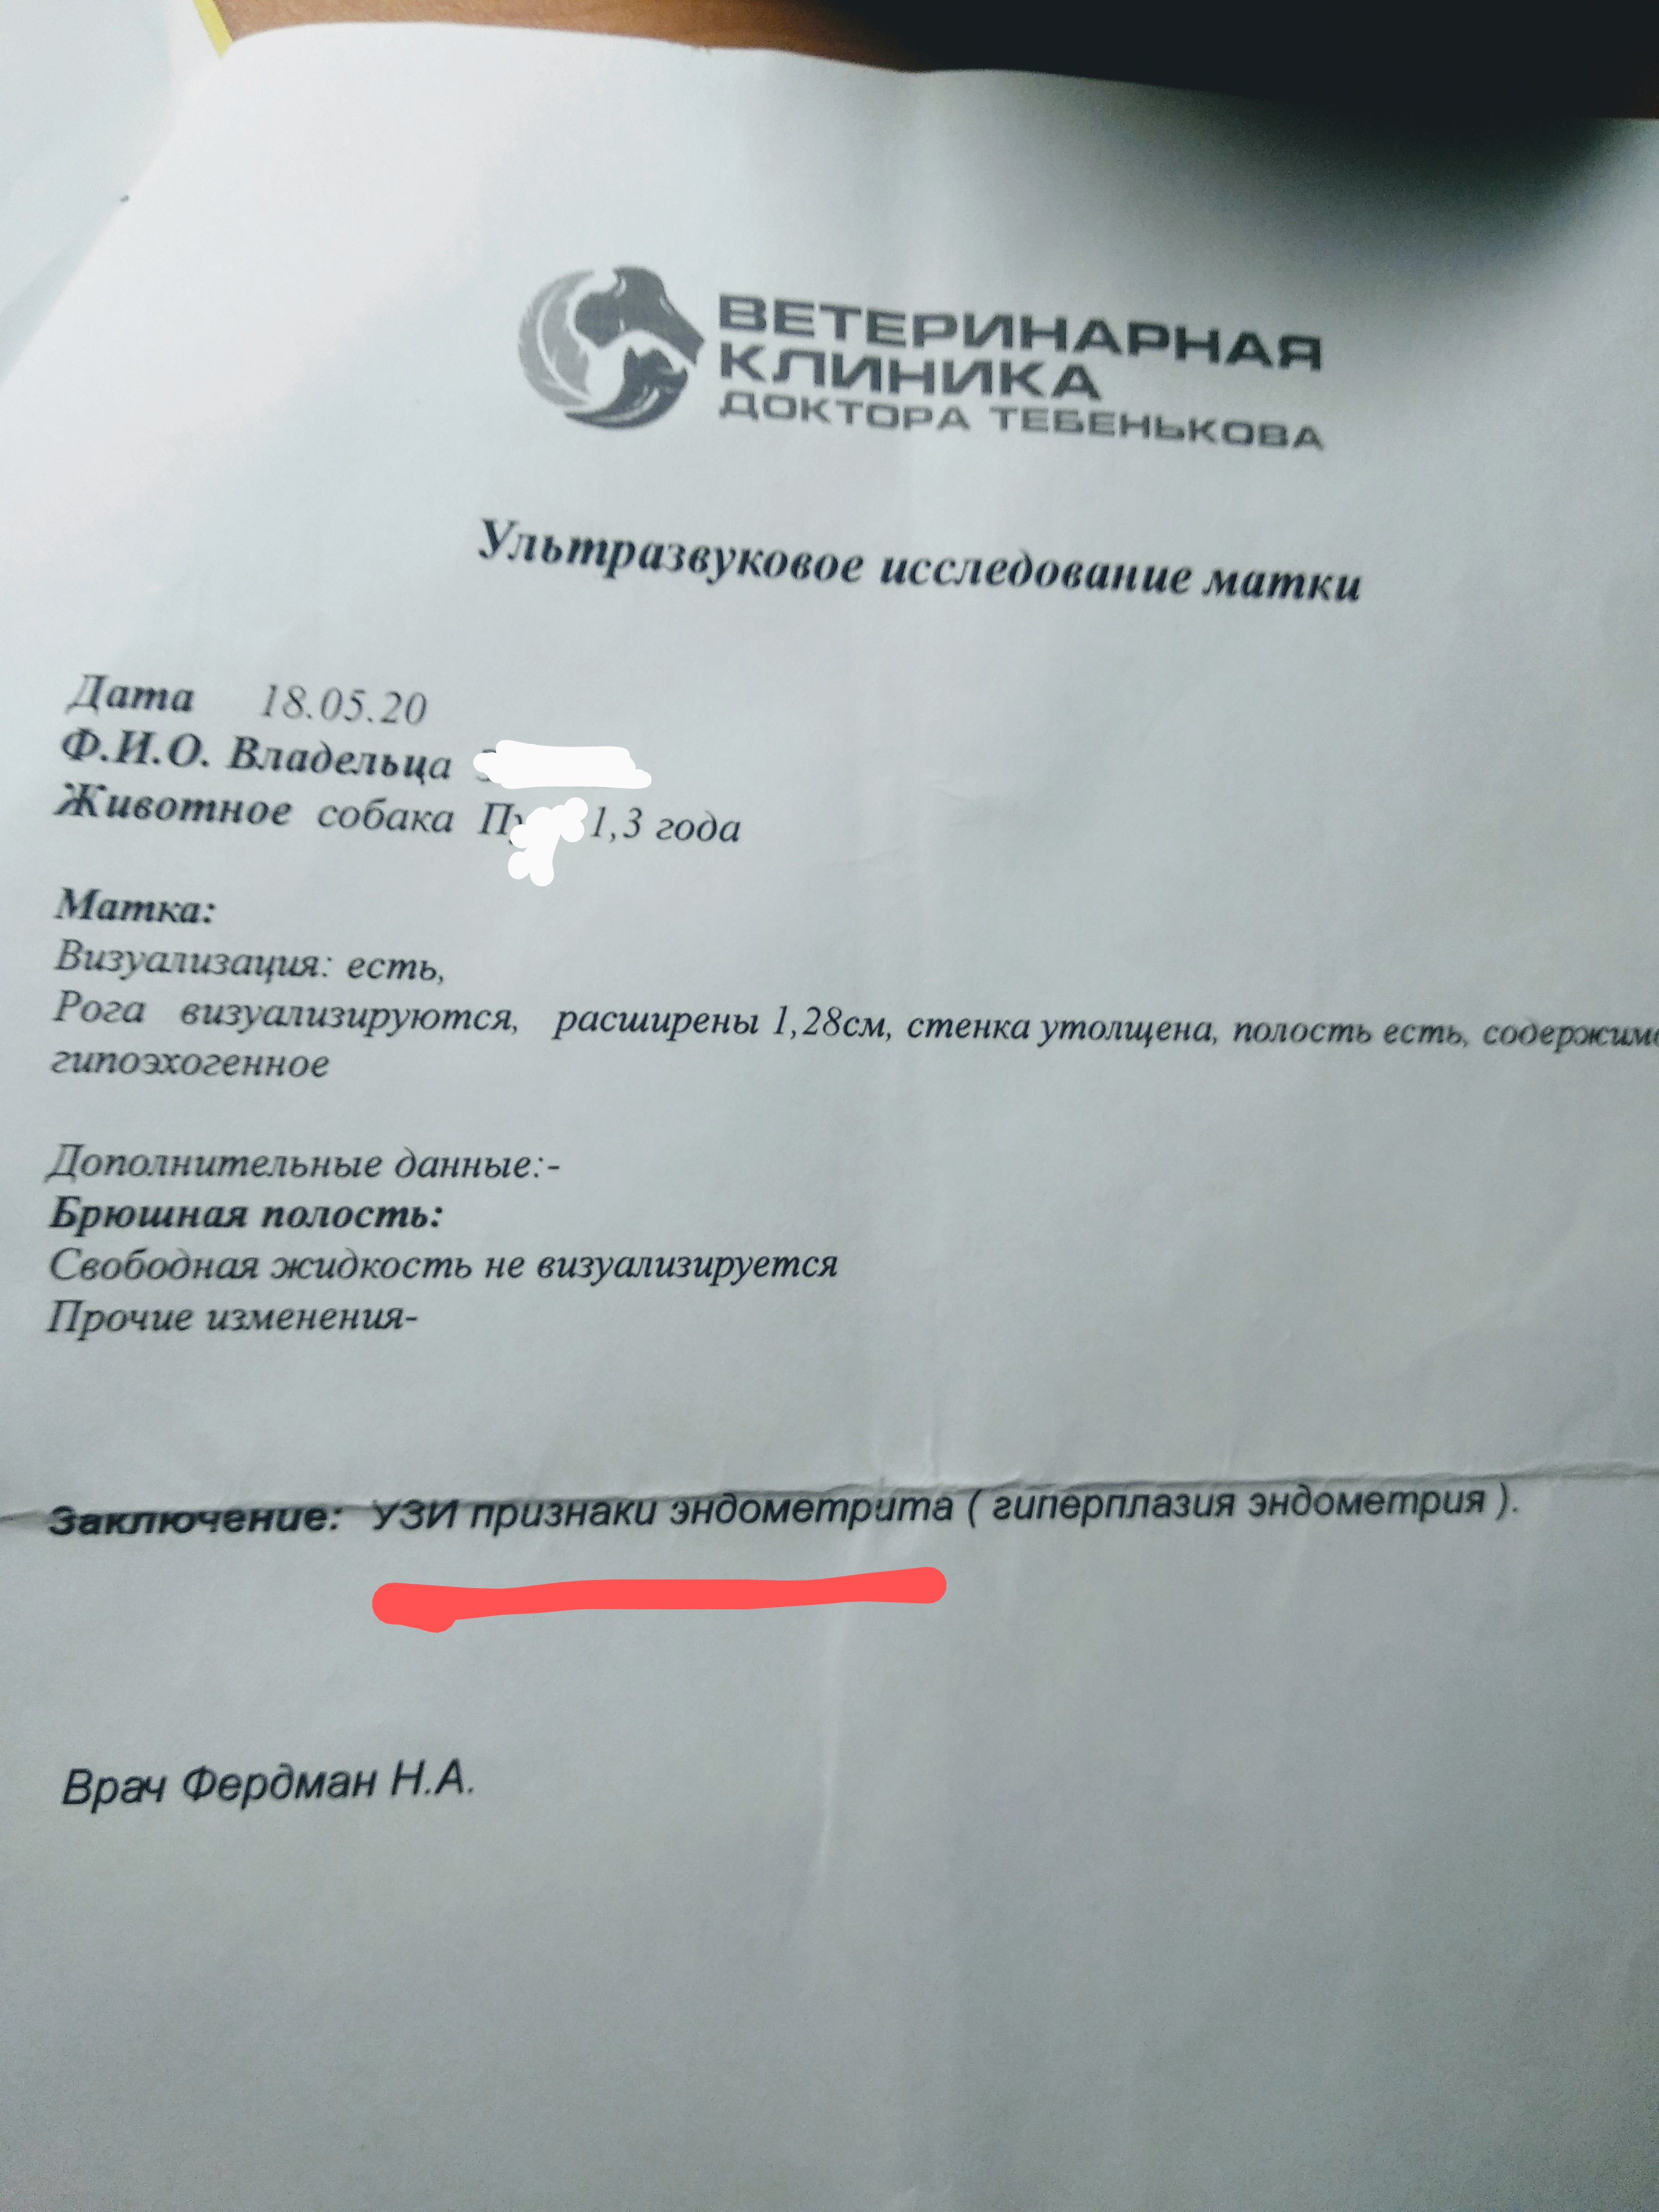 Екатеринбург клиника тебенькова адрес